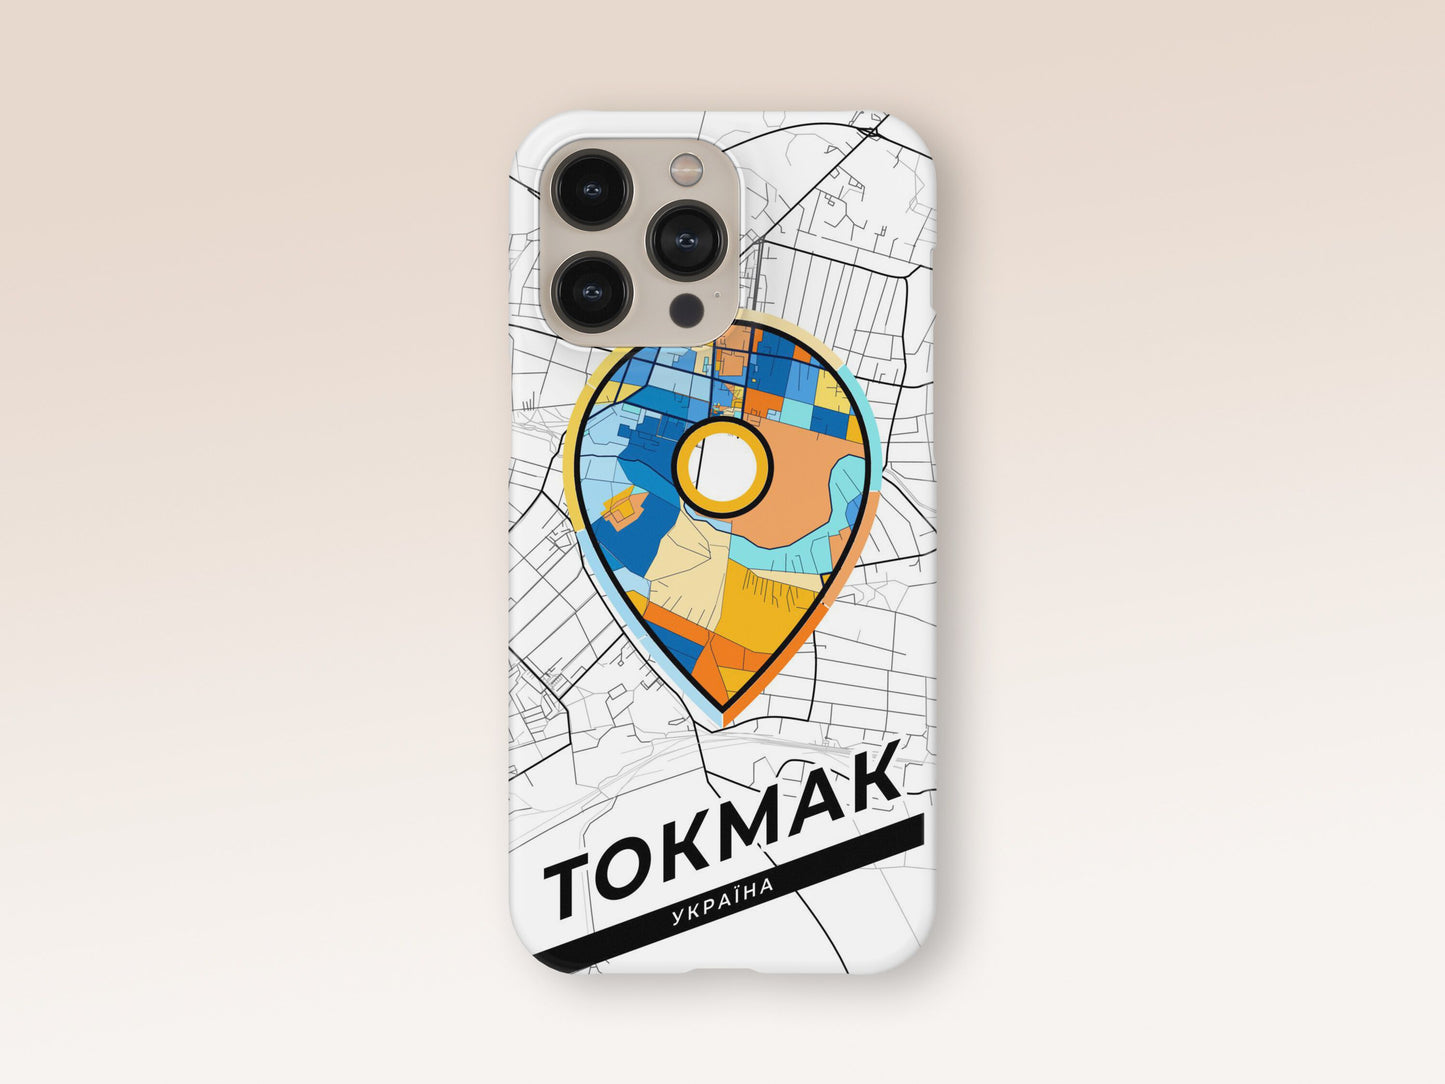 Tokmak Ukraine slim phone case with colorful icon 1